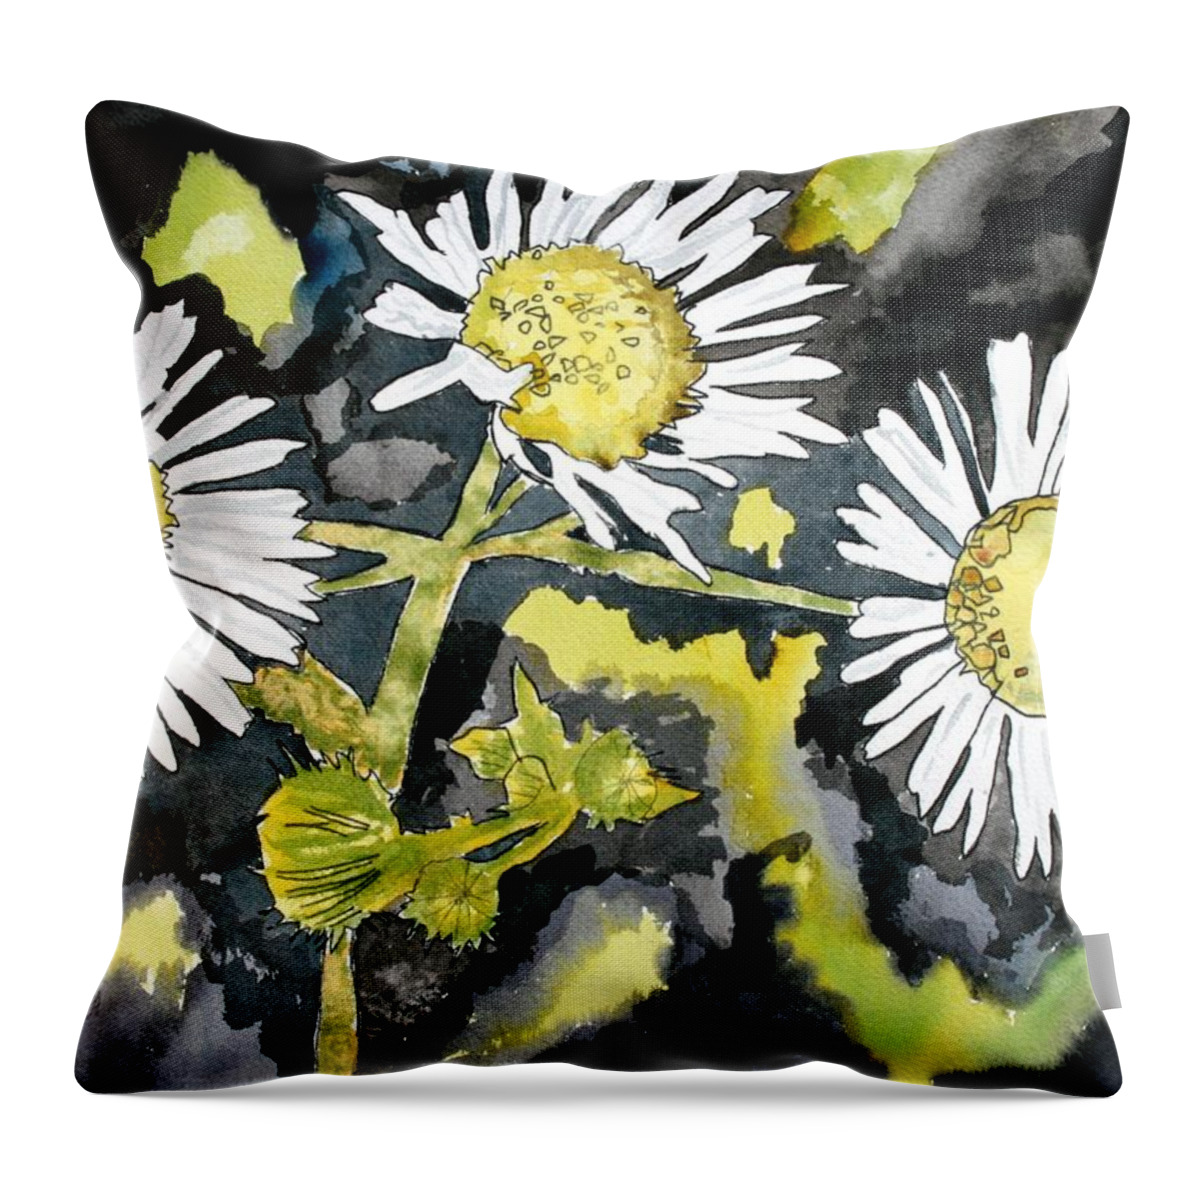 Wildflower Throw Pillow featuring the painting Heath Aster Flower Art Print by Derek Mccrea